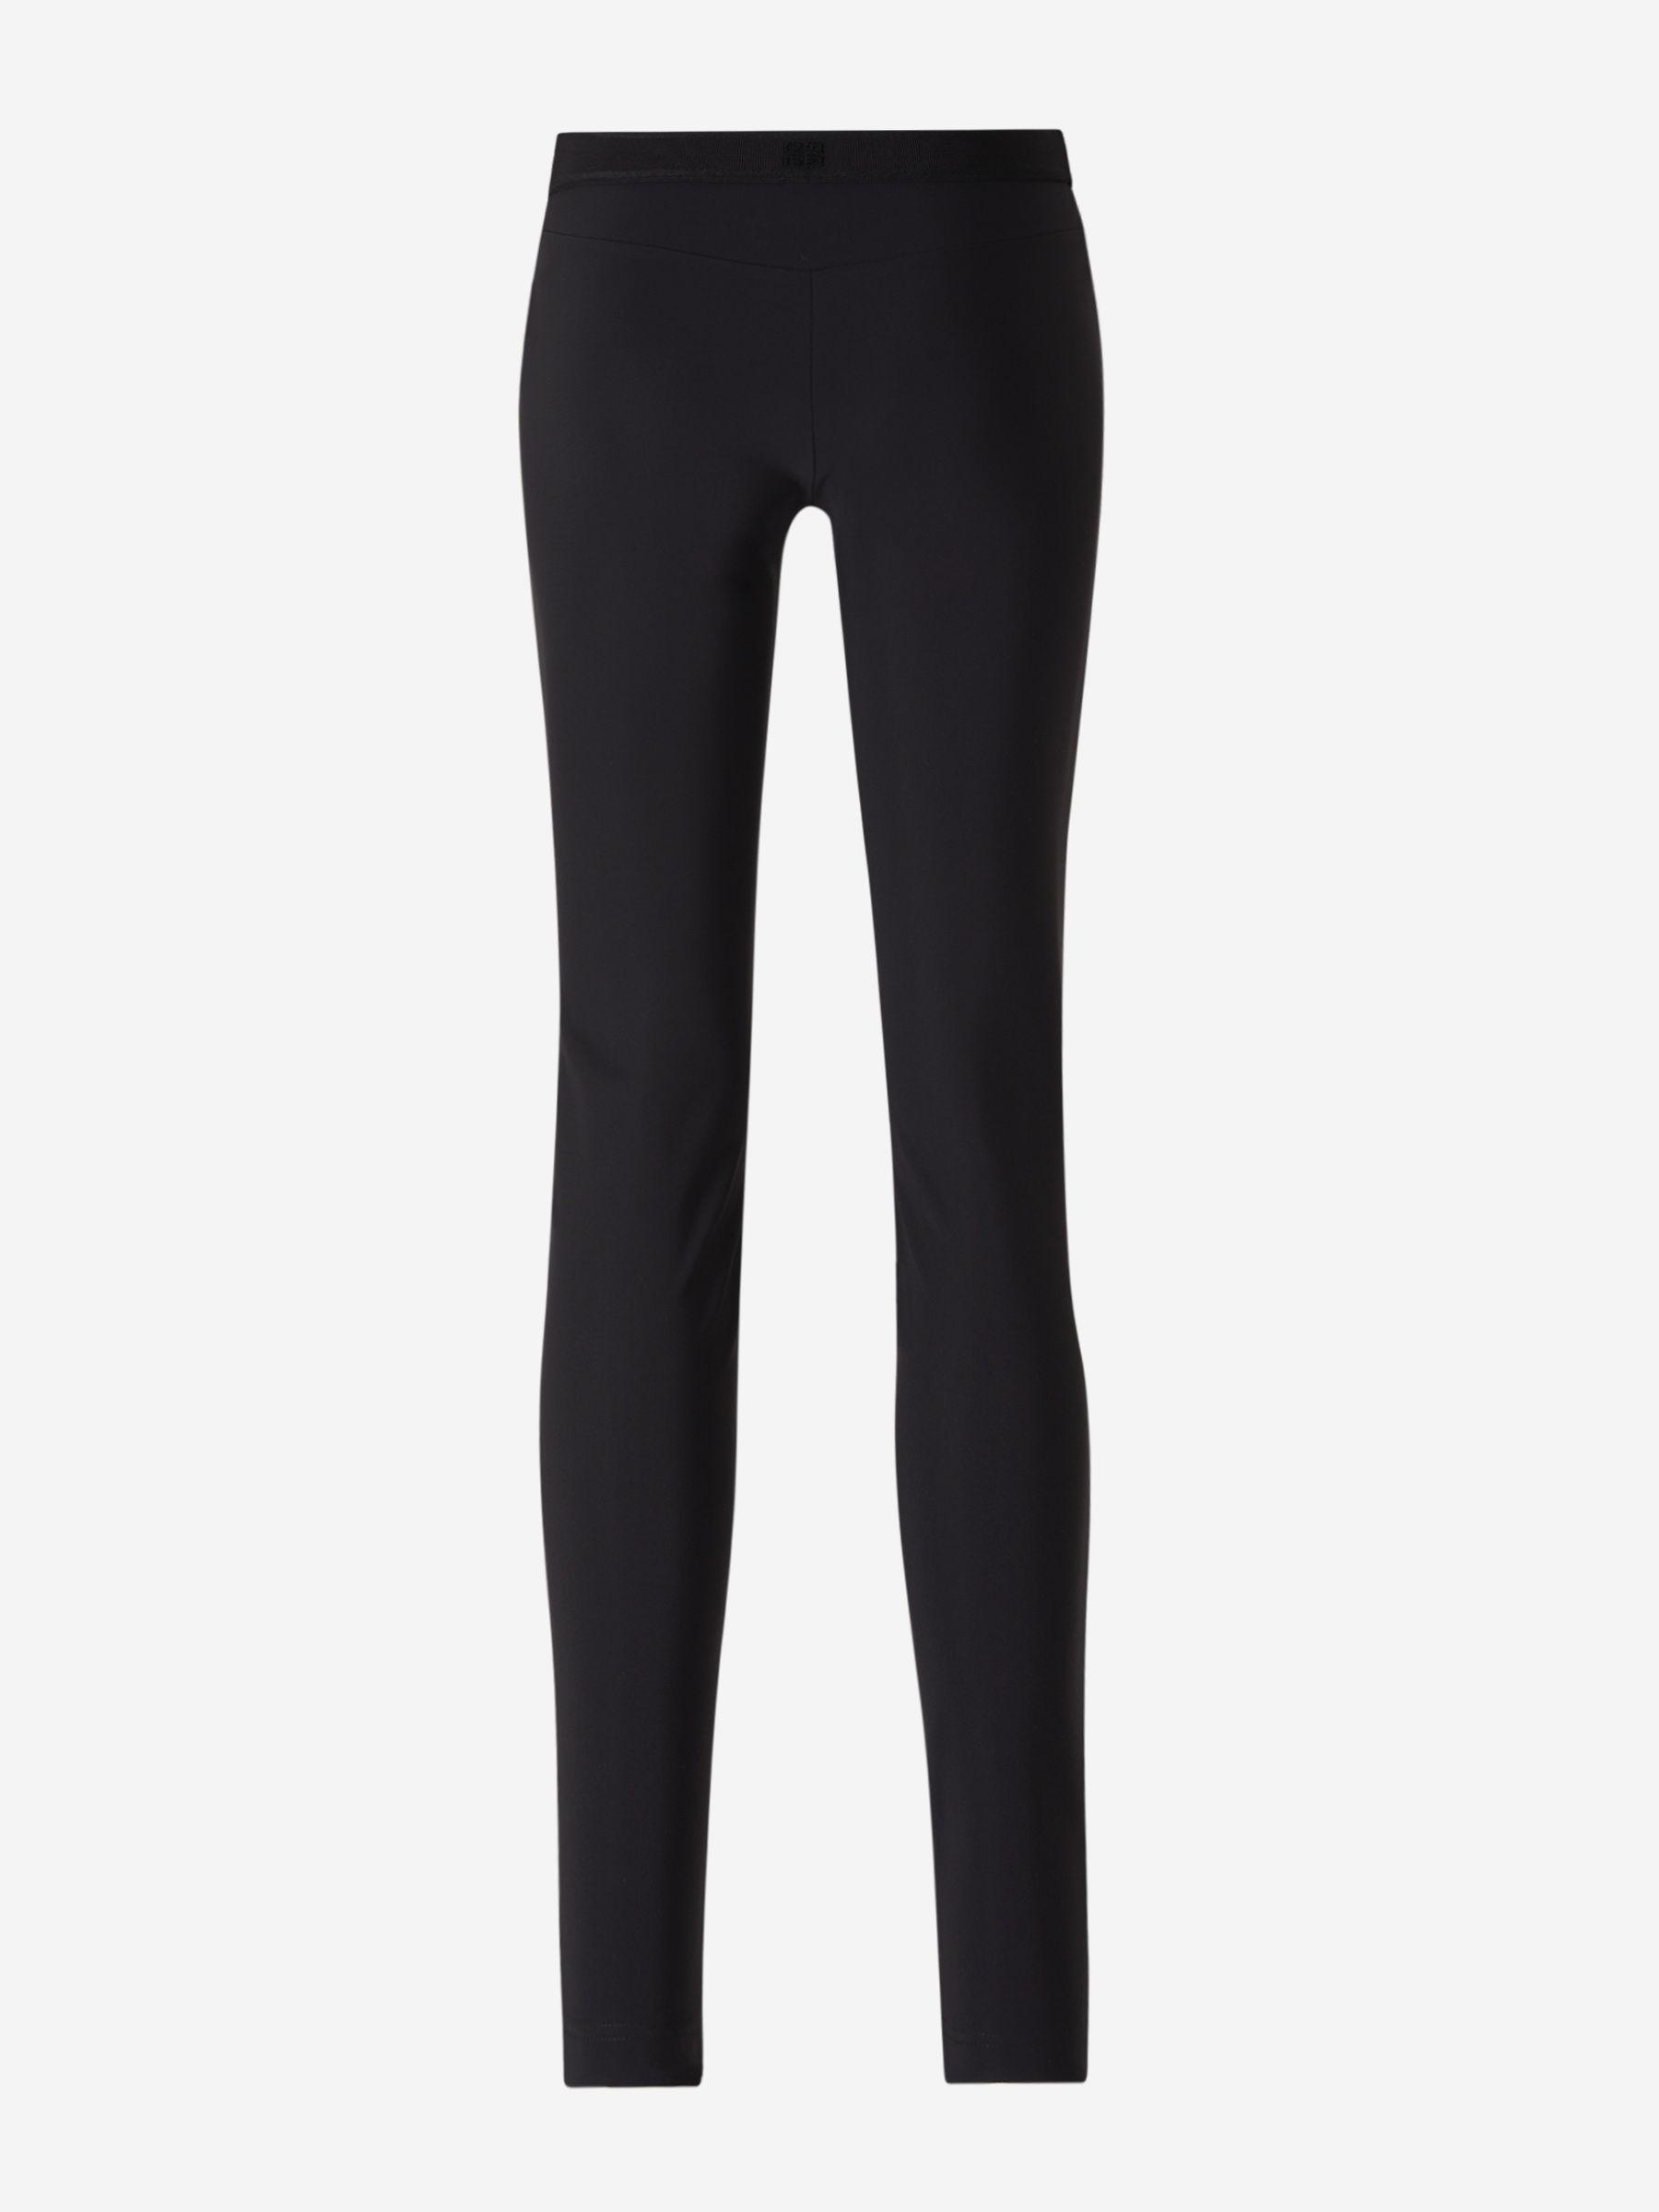 Givenchy Elastic Knit Leggings in Black | Lyst